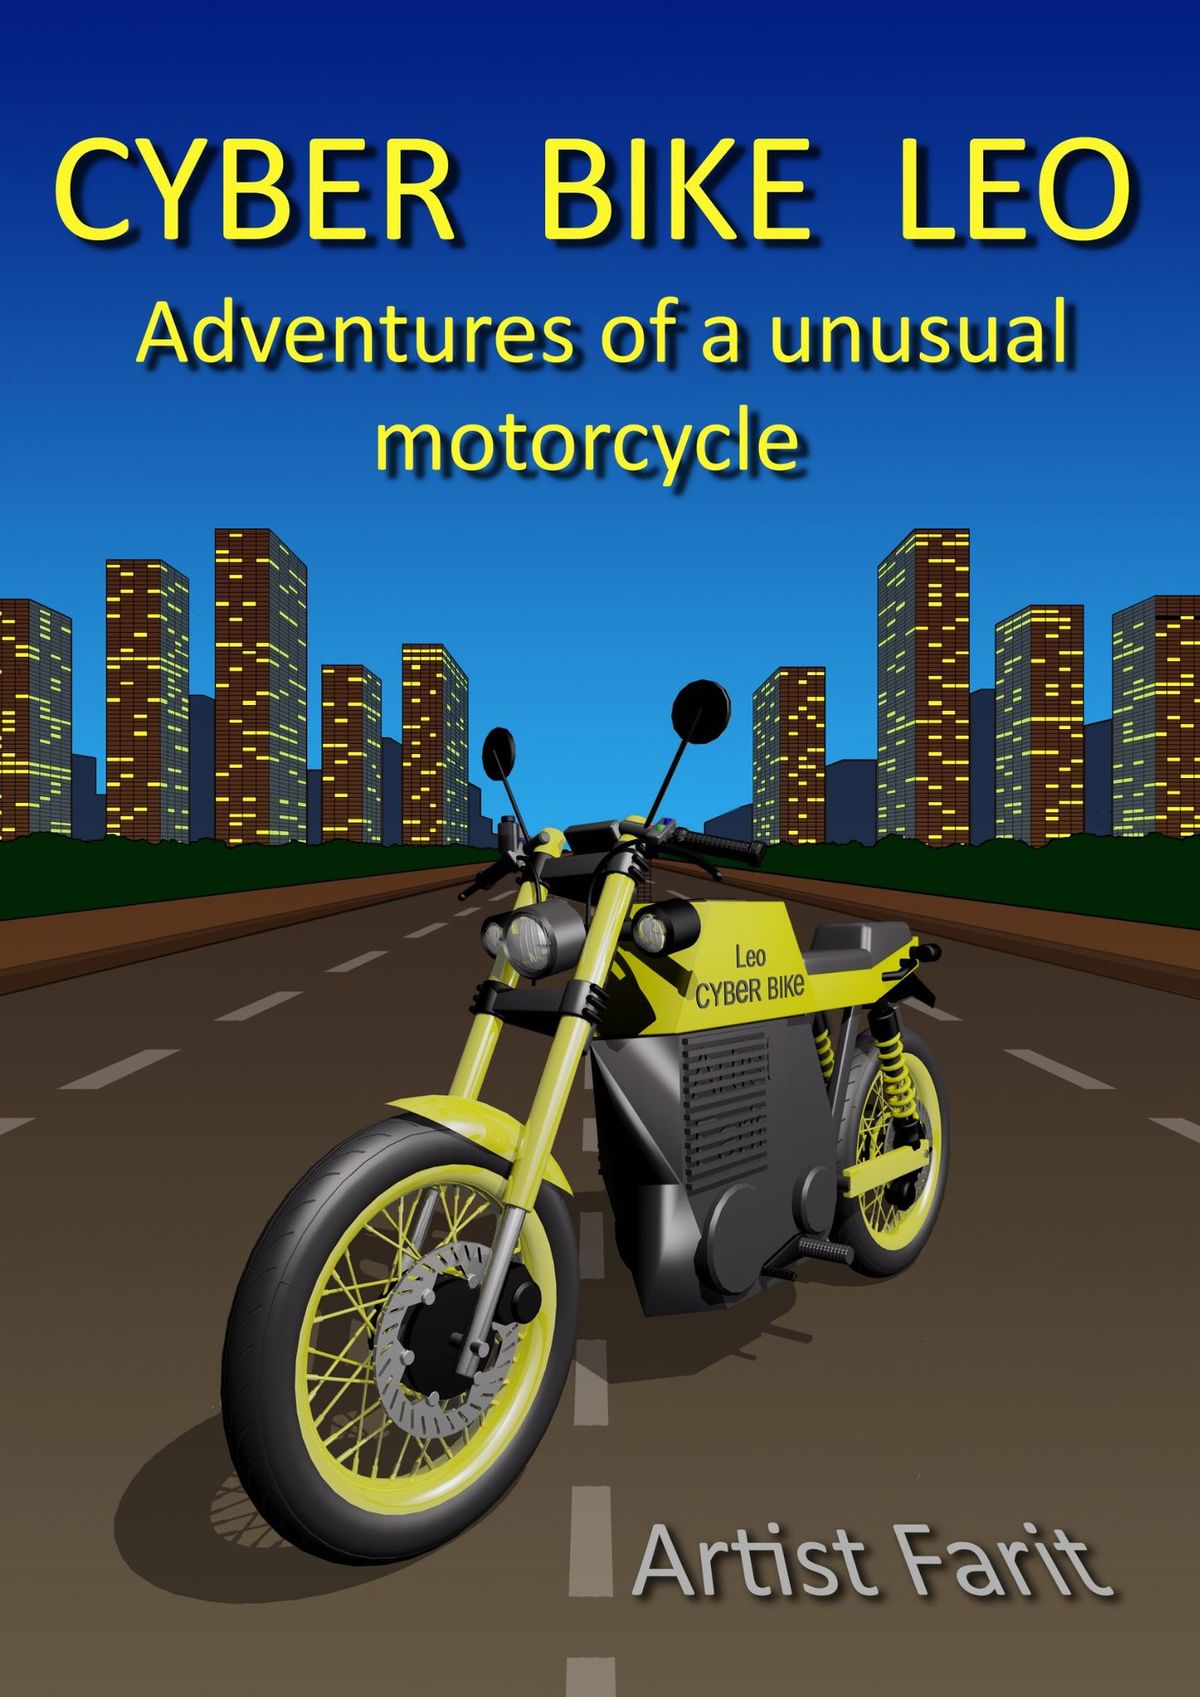 Cyber Bike Leo. Adventures of an unusual motorcycle – Farit Artist